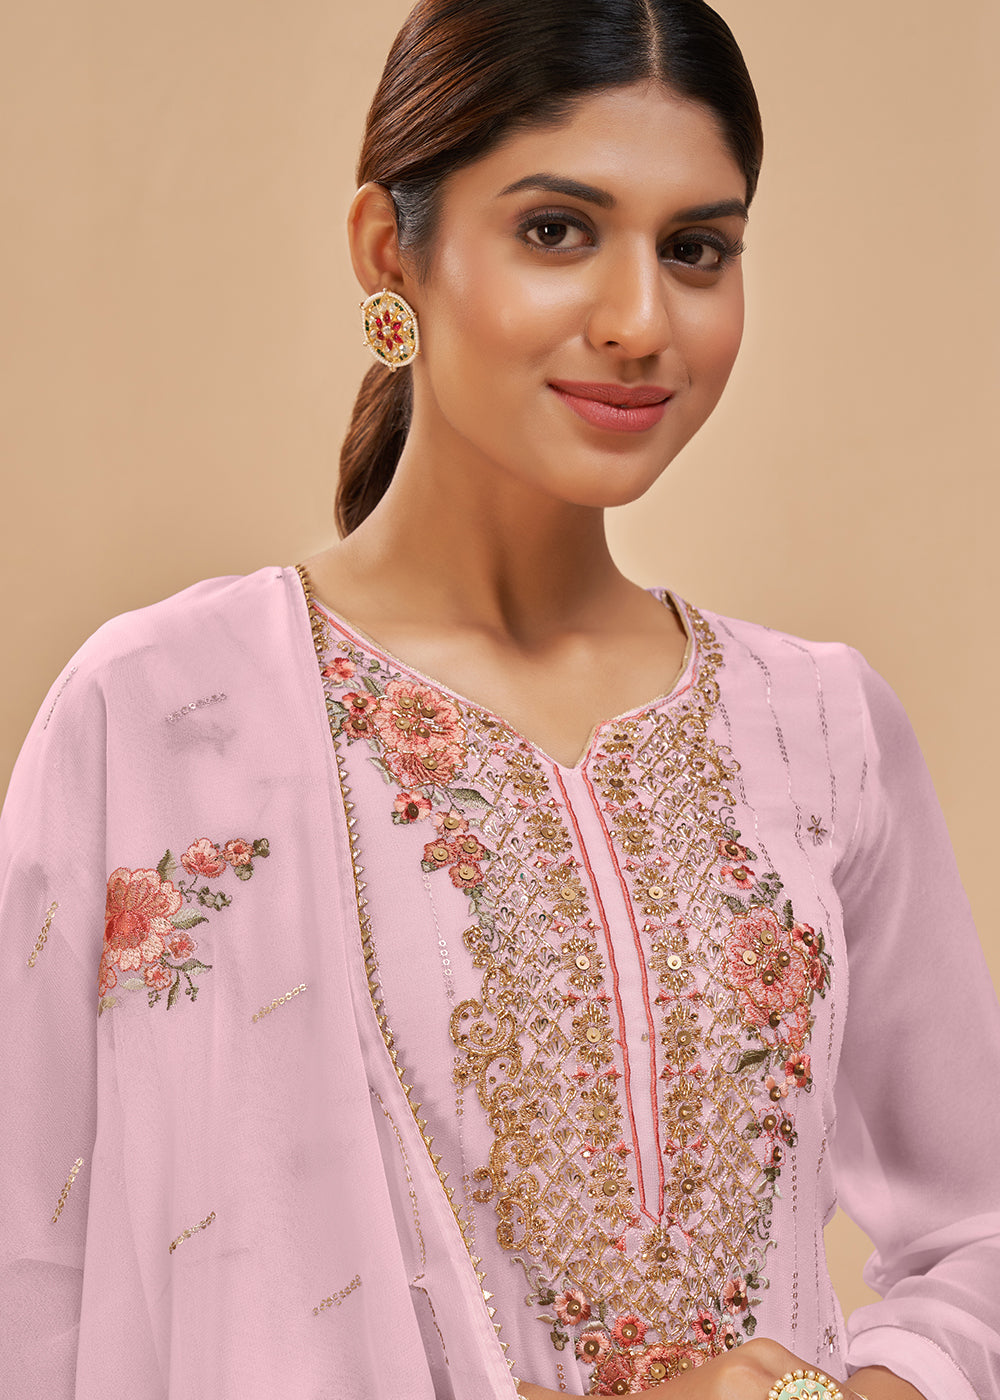 Buy Light Pink Beautifully Embroidered Suit - Elegant Salwar Kameez